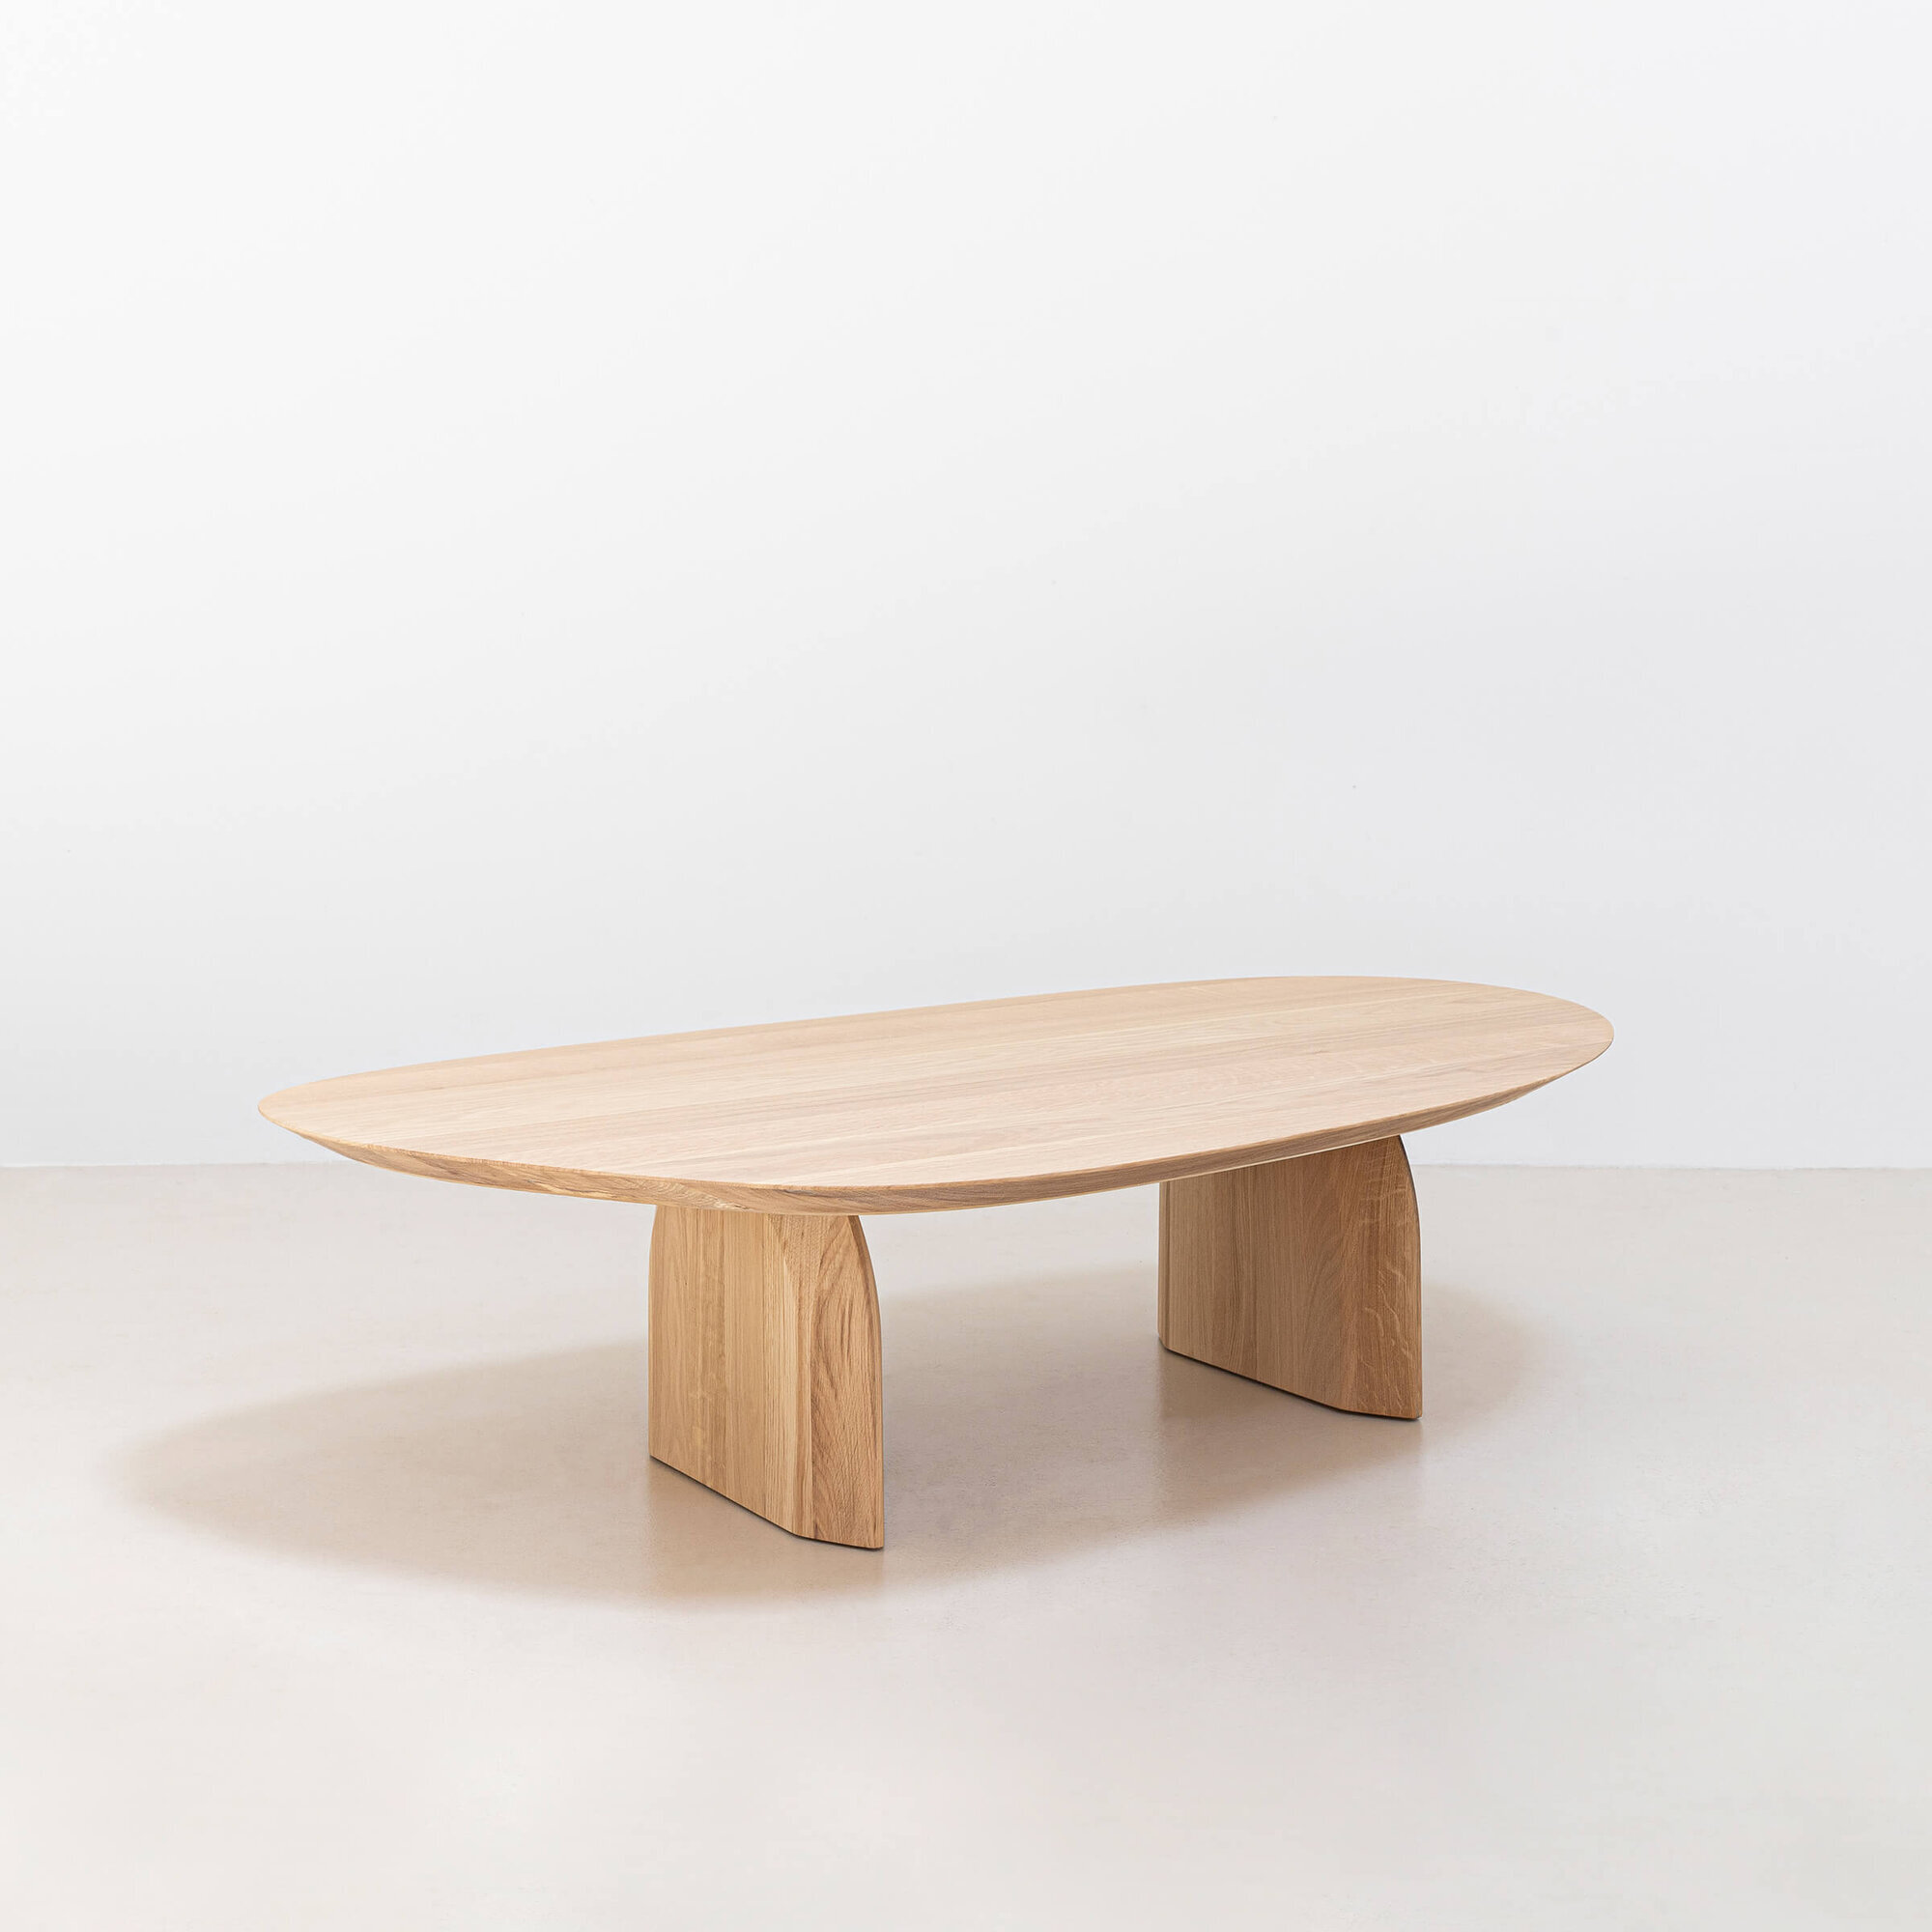 Design Coffee Table | Slot Coffee Table LivingBoard P5 Naturel lacquer | Amoeba LivingBoard P5 Naturel lacquer | Studio HENK | 